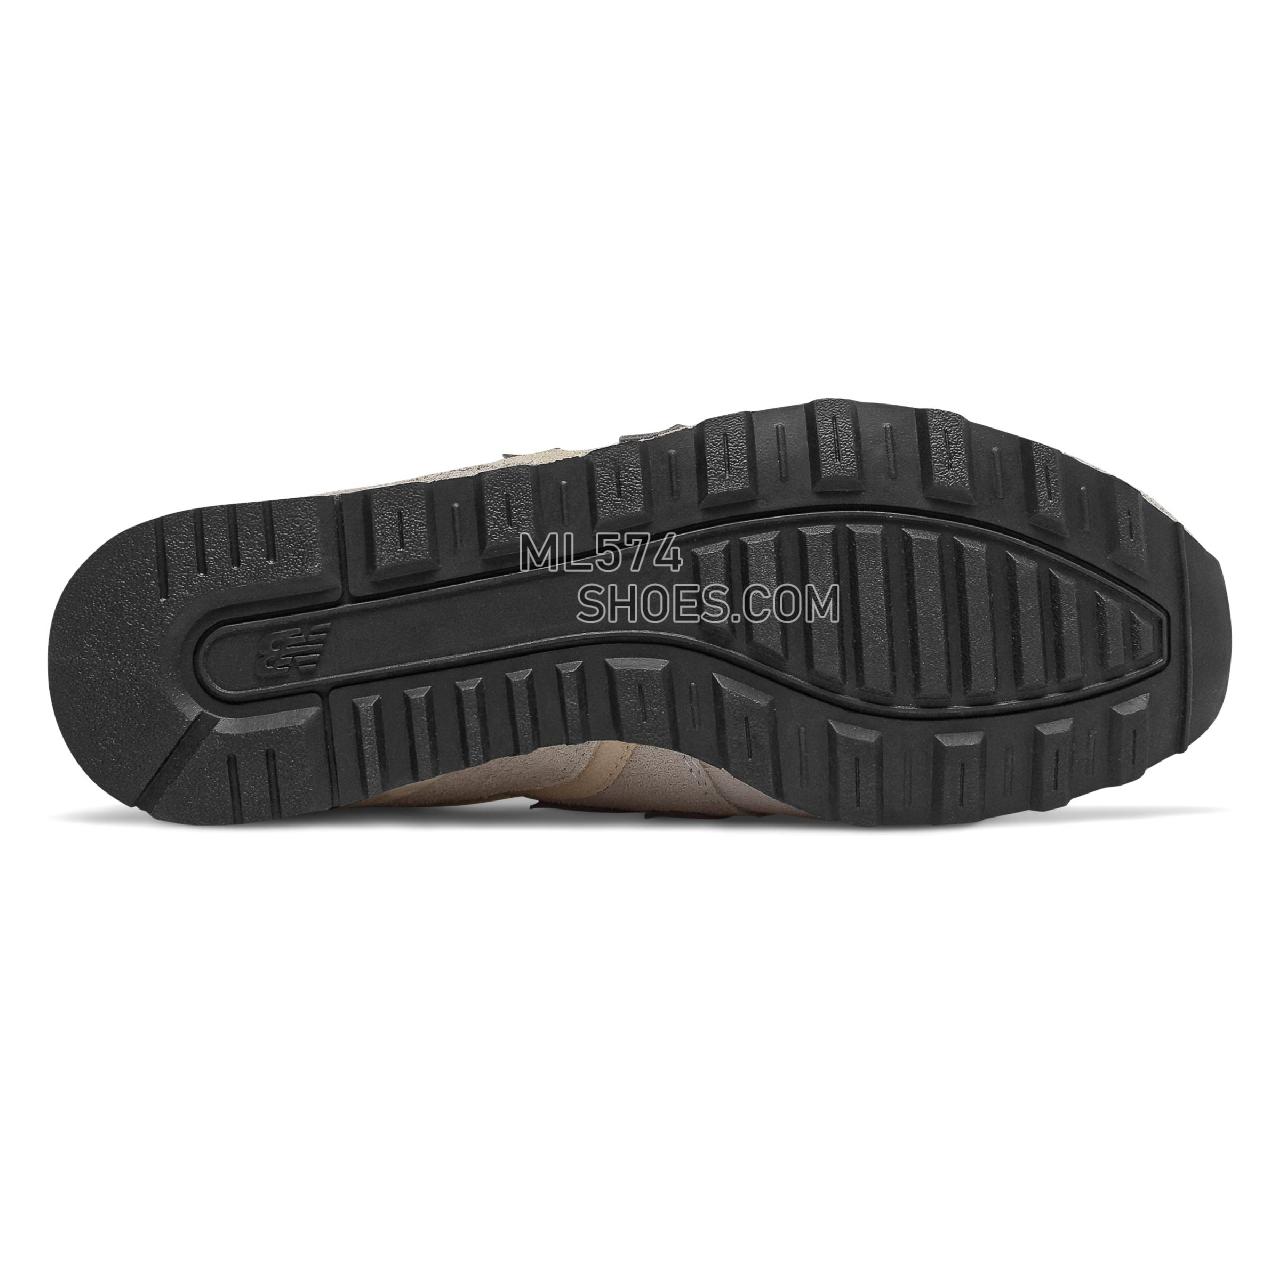 New Balance 996 - Women's Classic Sneakers - Angora with Sea Salt - WL996VHA